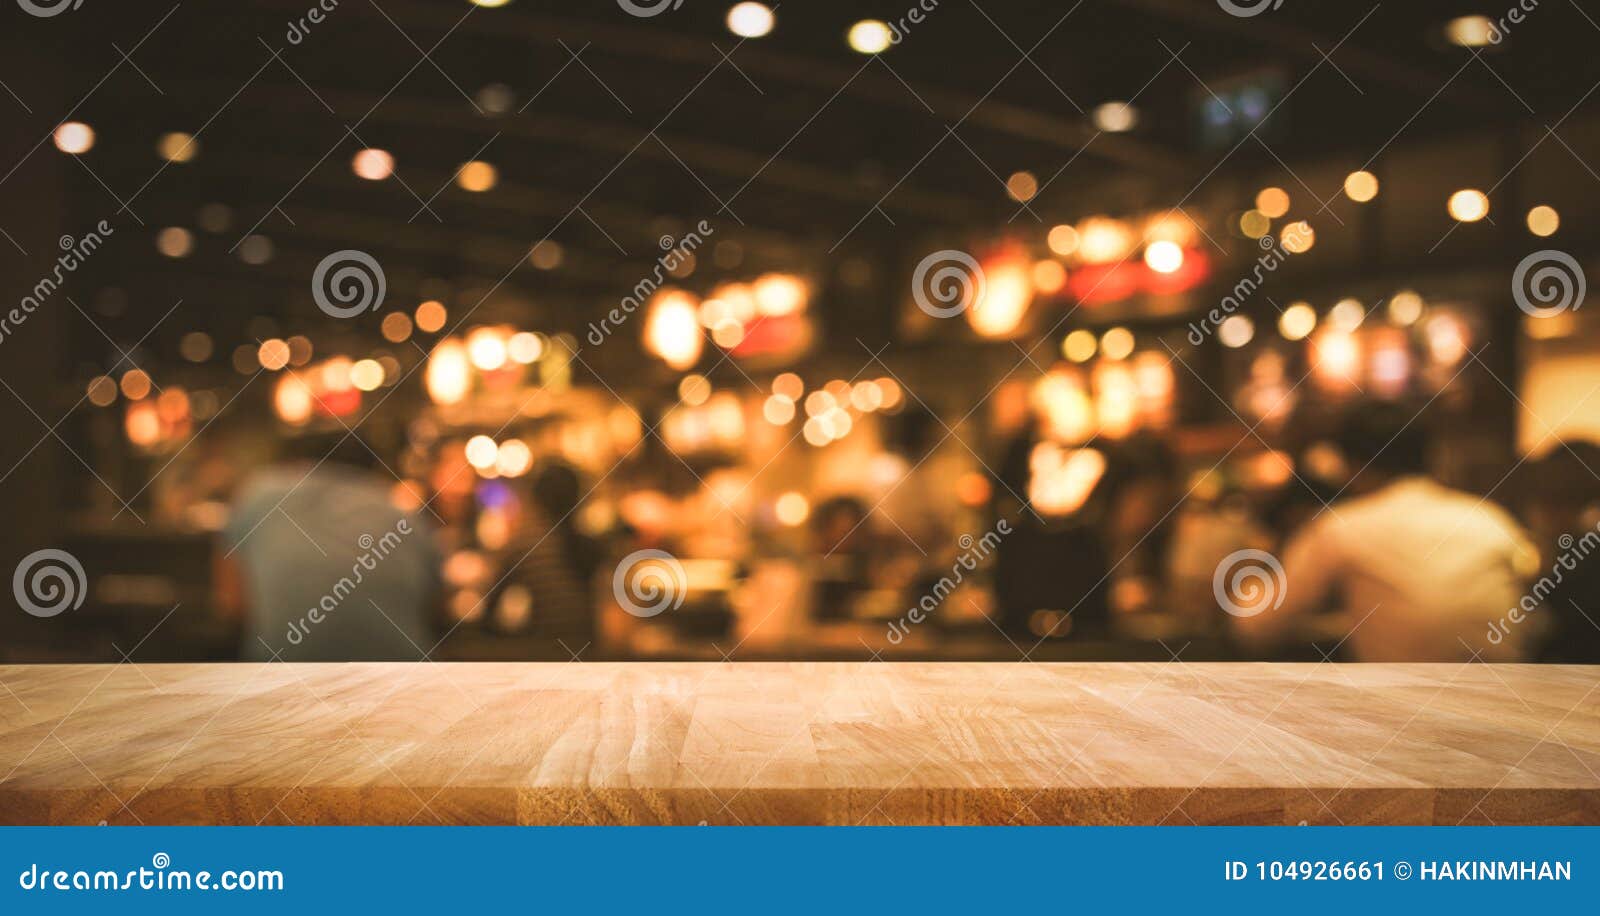 wood table top bar with blur light bokeh in dark night cafe